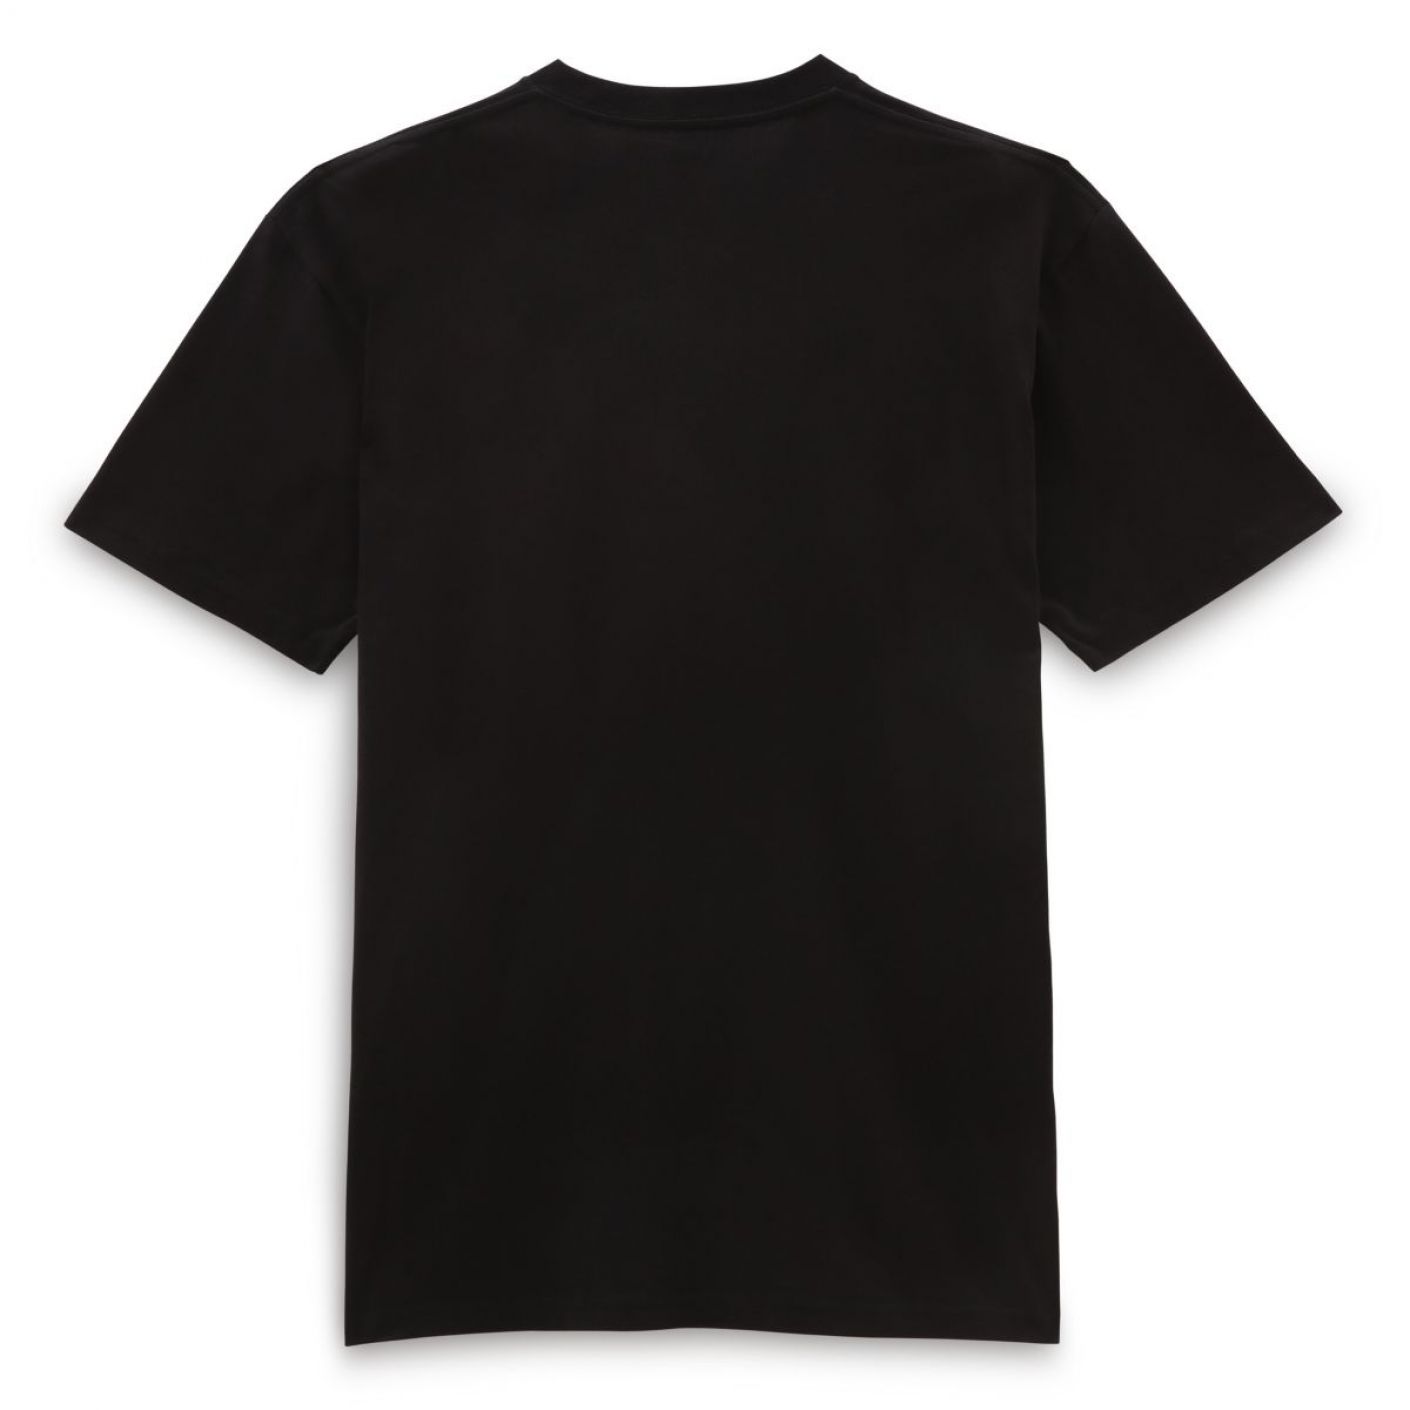 Vans T-Shirt Classic con Logo Nera da Ragazzo